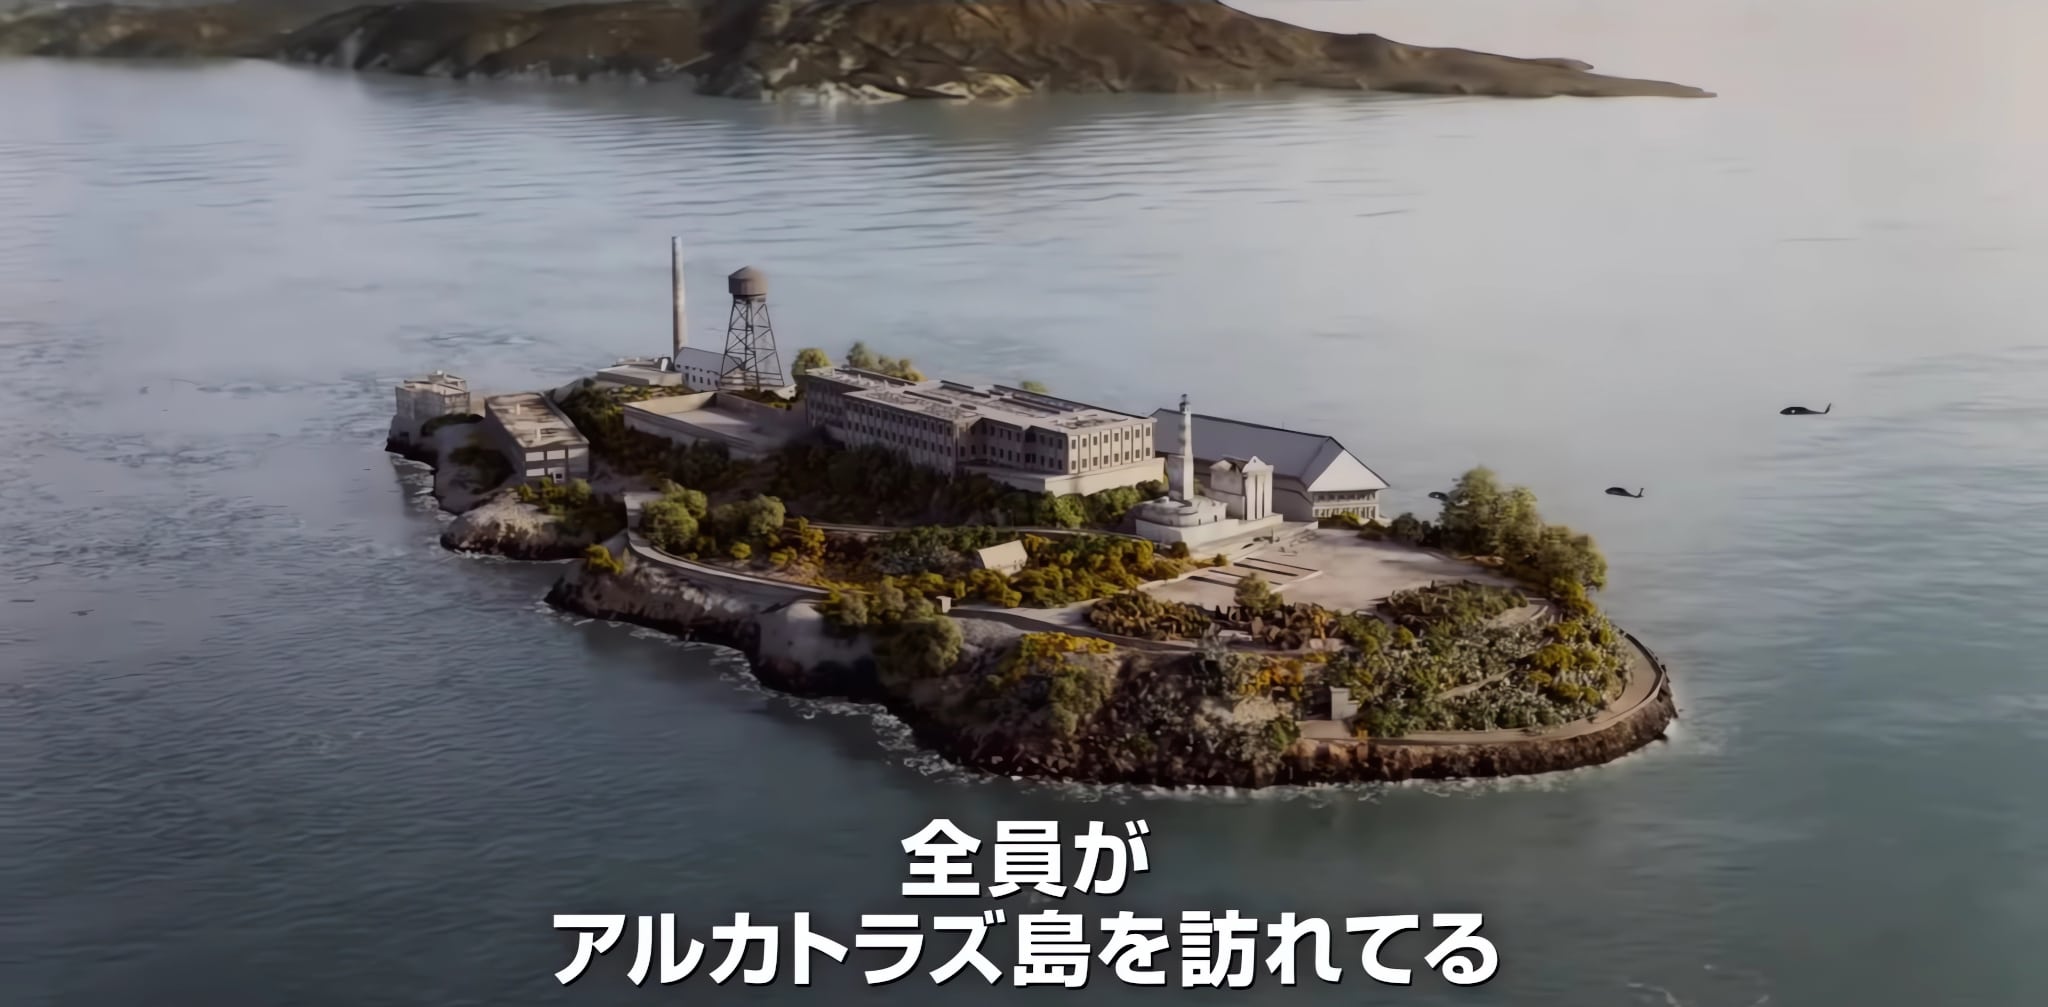 Alcatraz dans le film Resident Evil : Death Island